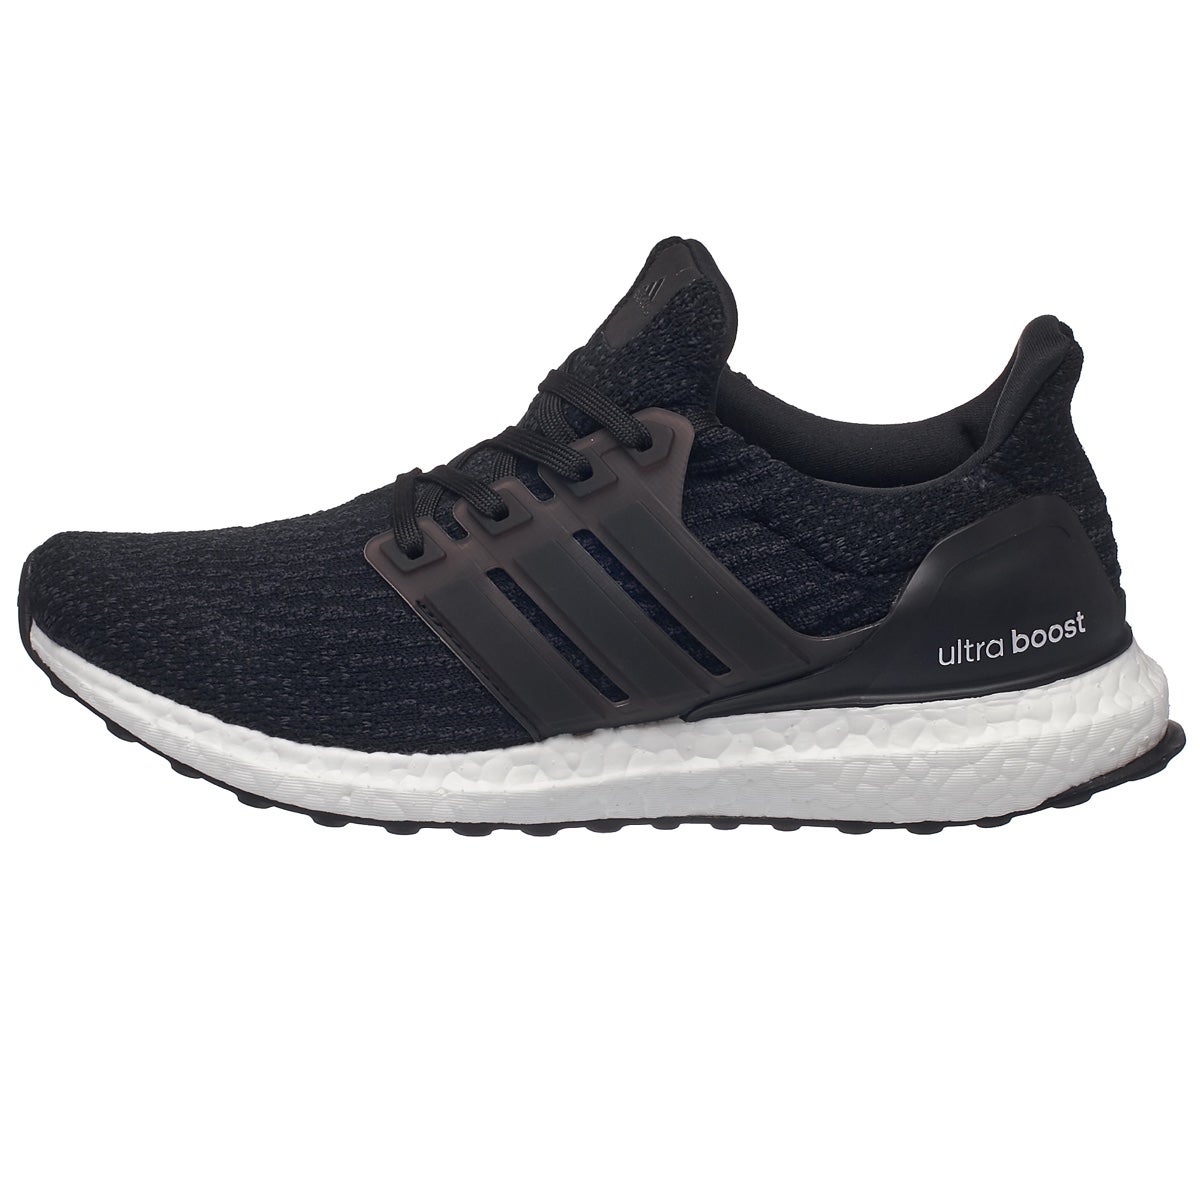 adidas Ultra Boost Women's Shoes Black/Black/Grey 360° View | Running ...